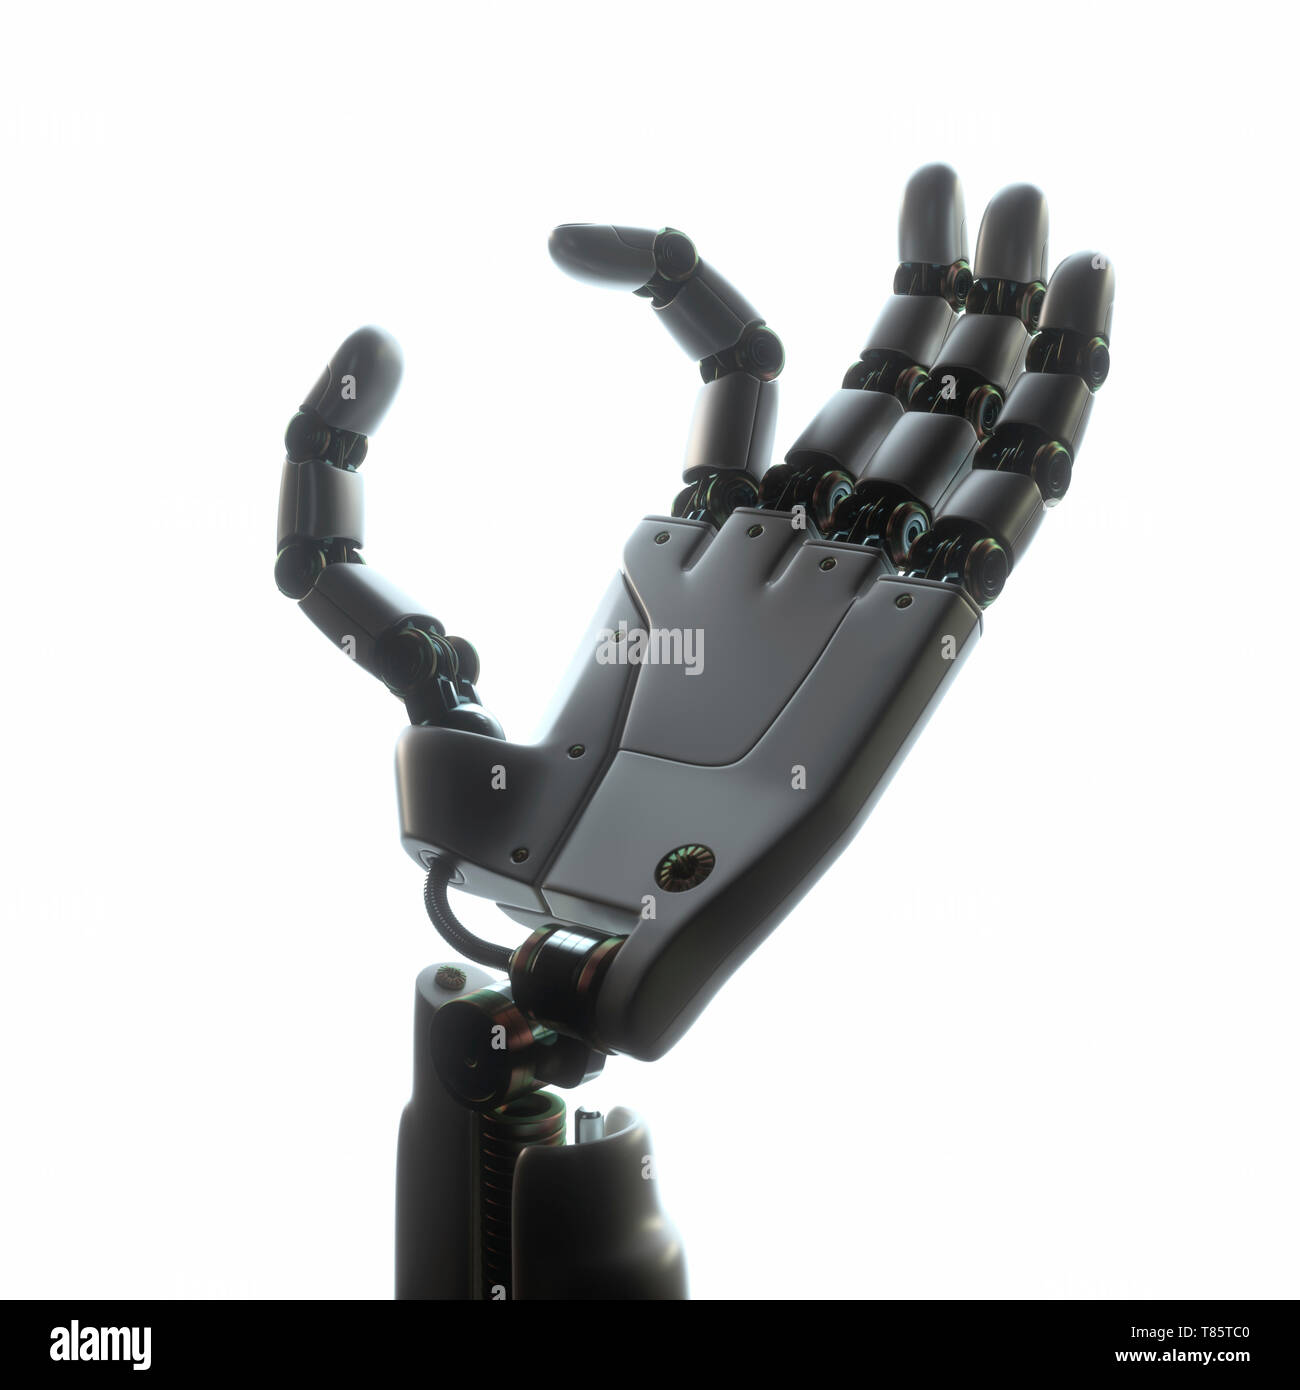 Robotic hand, illustration Stock Photo